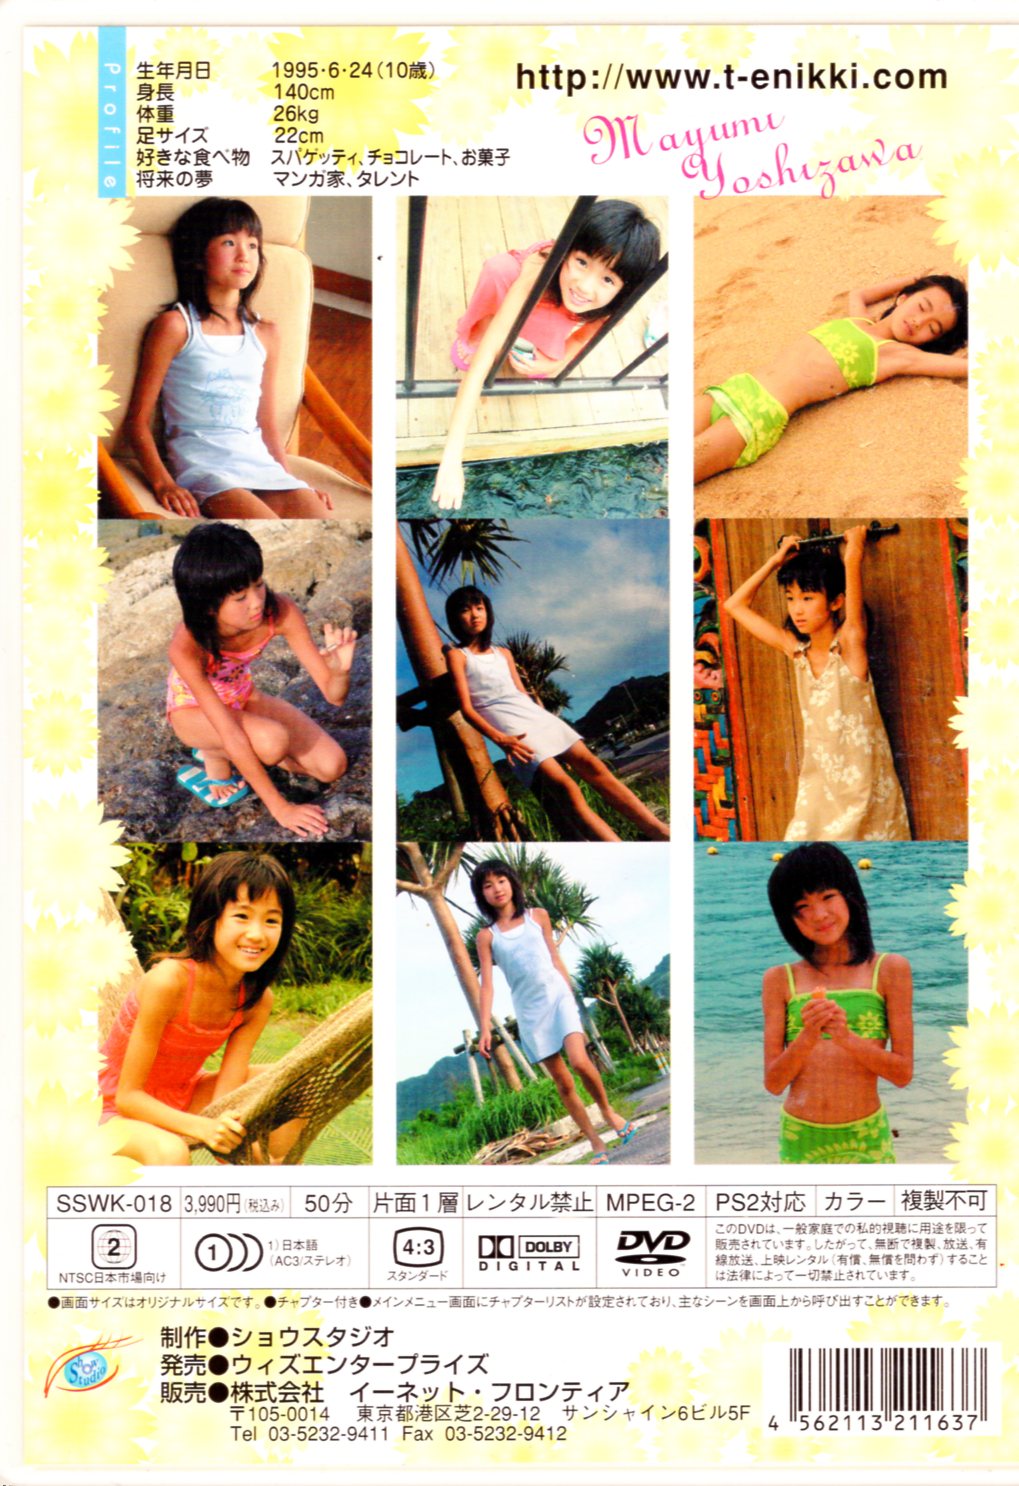 E-net Frontier (Mayumi Yoshizawa) DVD Angel's picture diary 